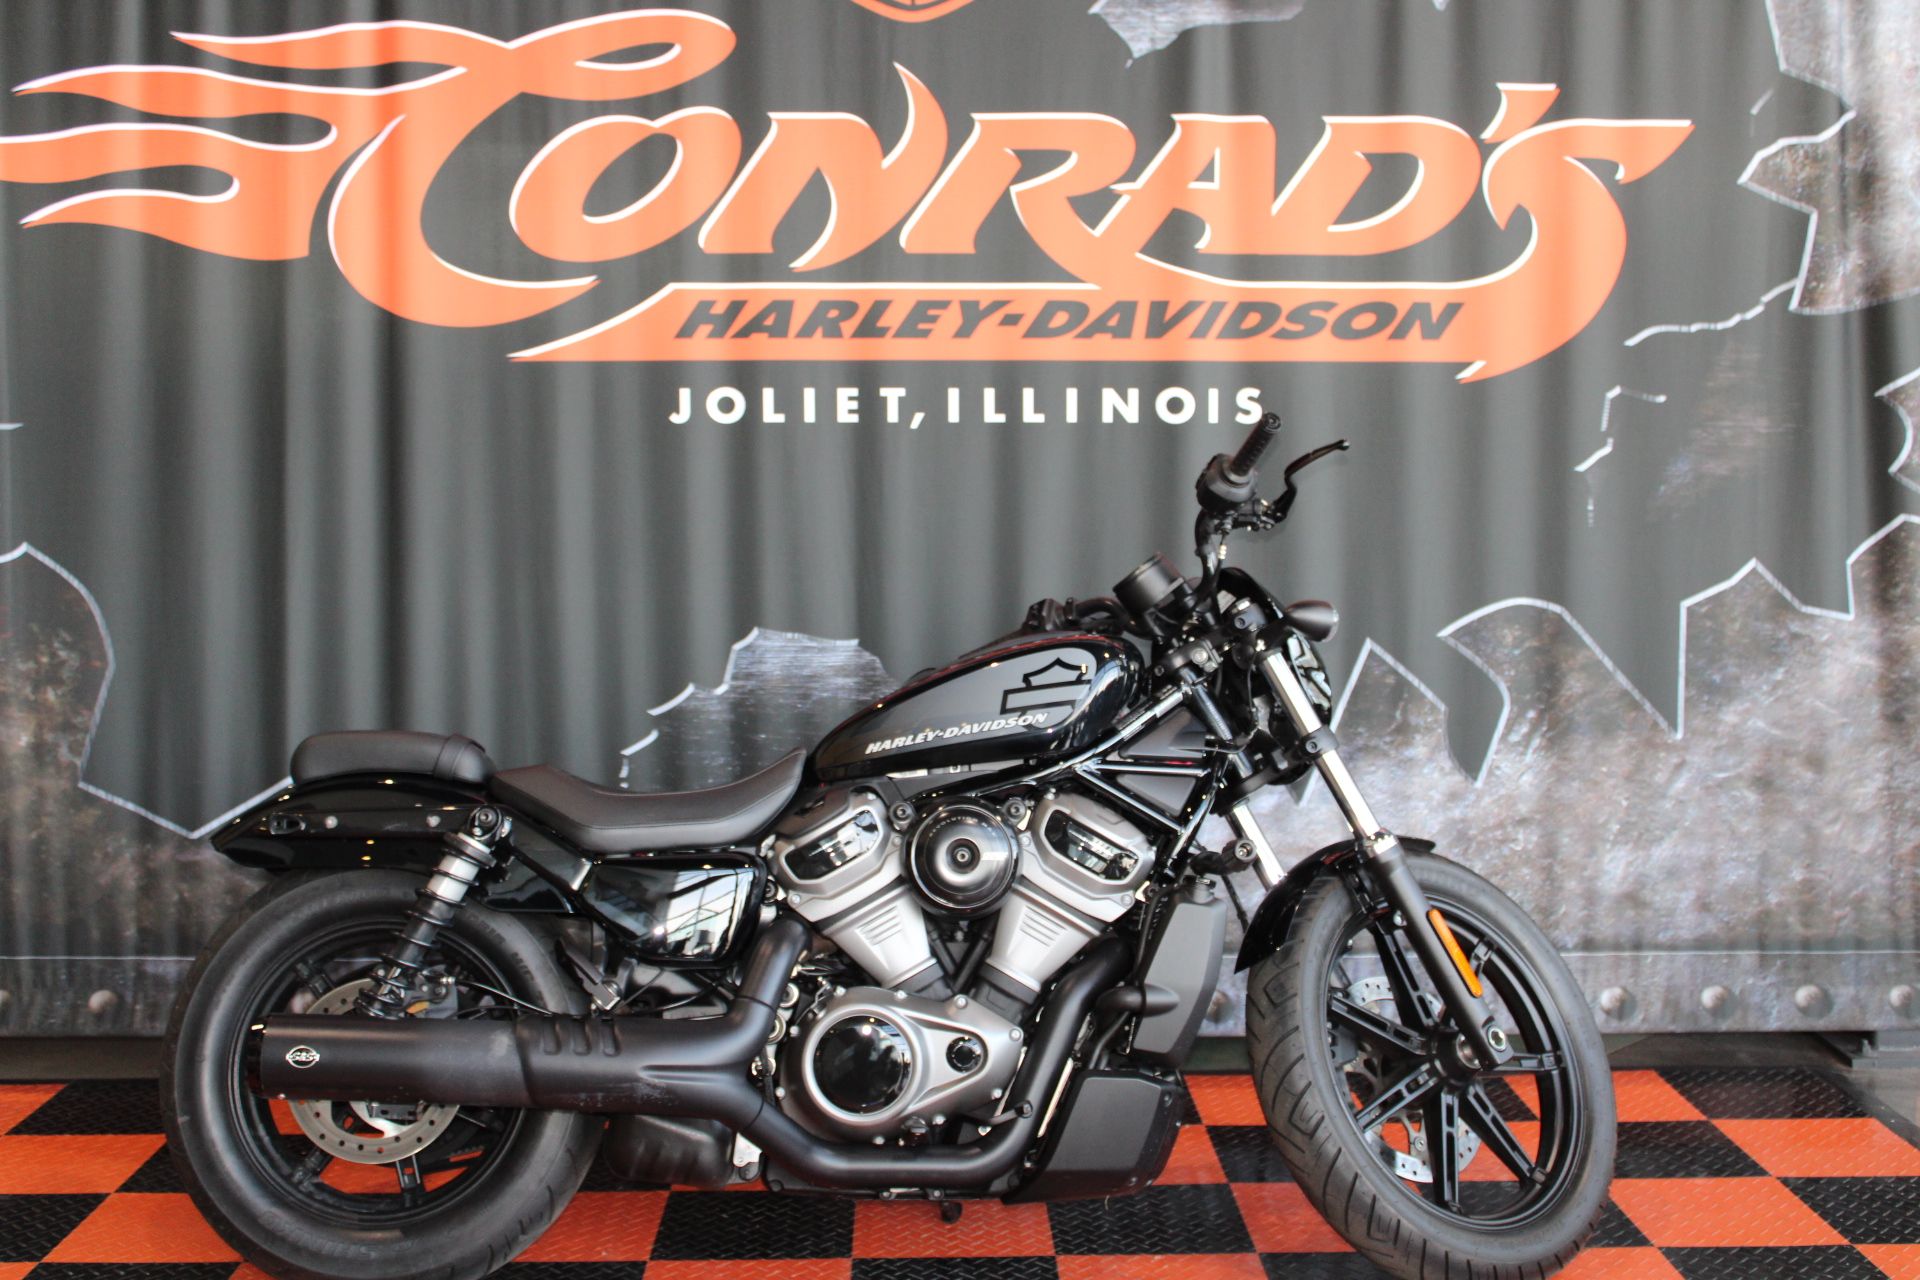 2022 Harley-Davidson Nightster™ in Shorewood, Illinois - Photo 1